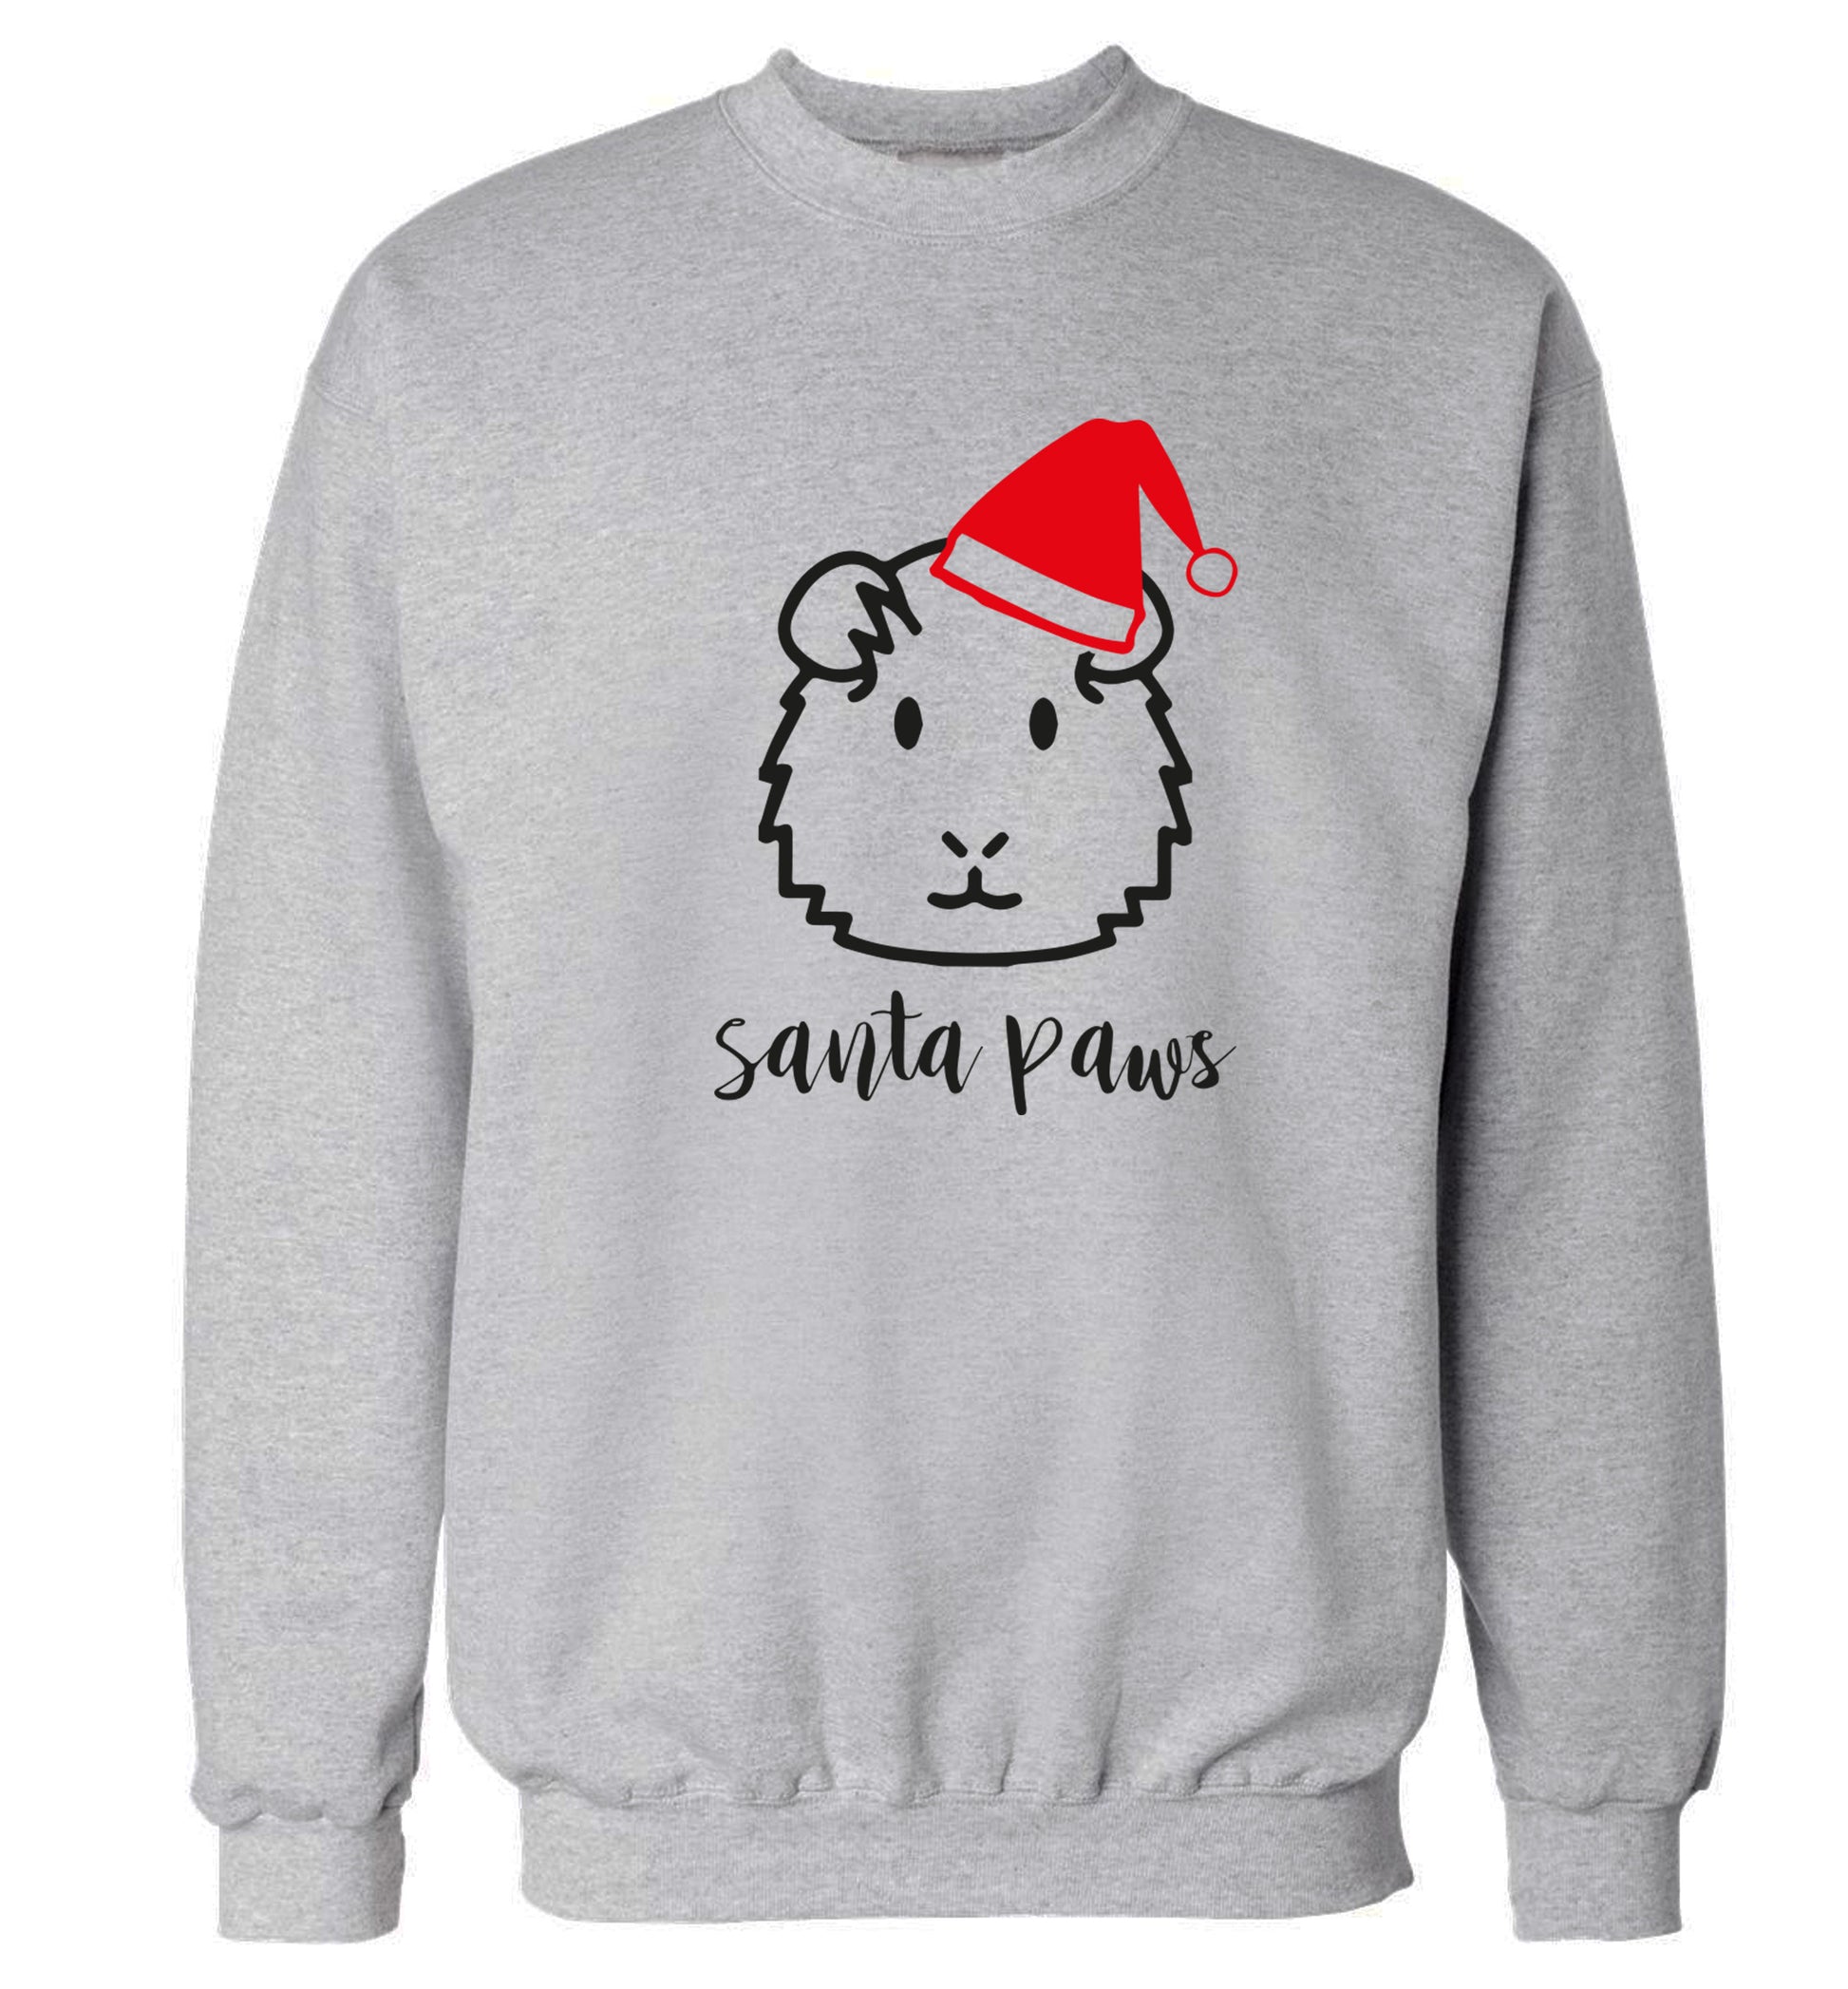 Guinea pig Santa Paws Adult's unisex grey  sweater 2XL